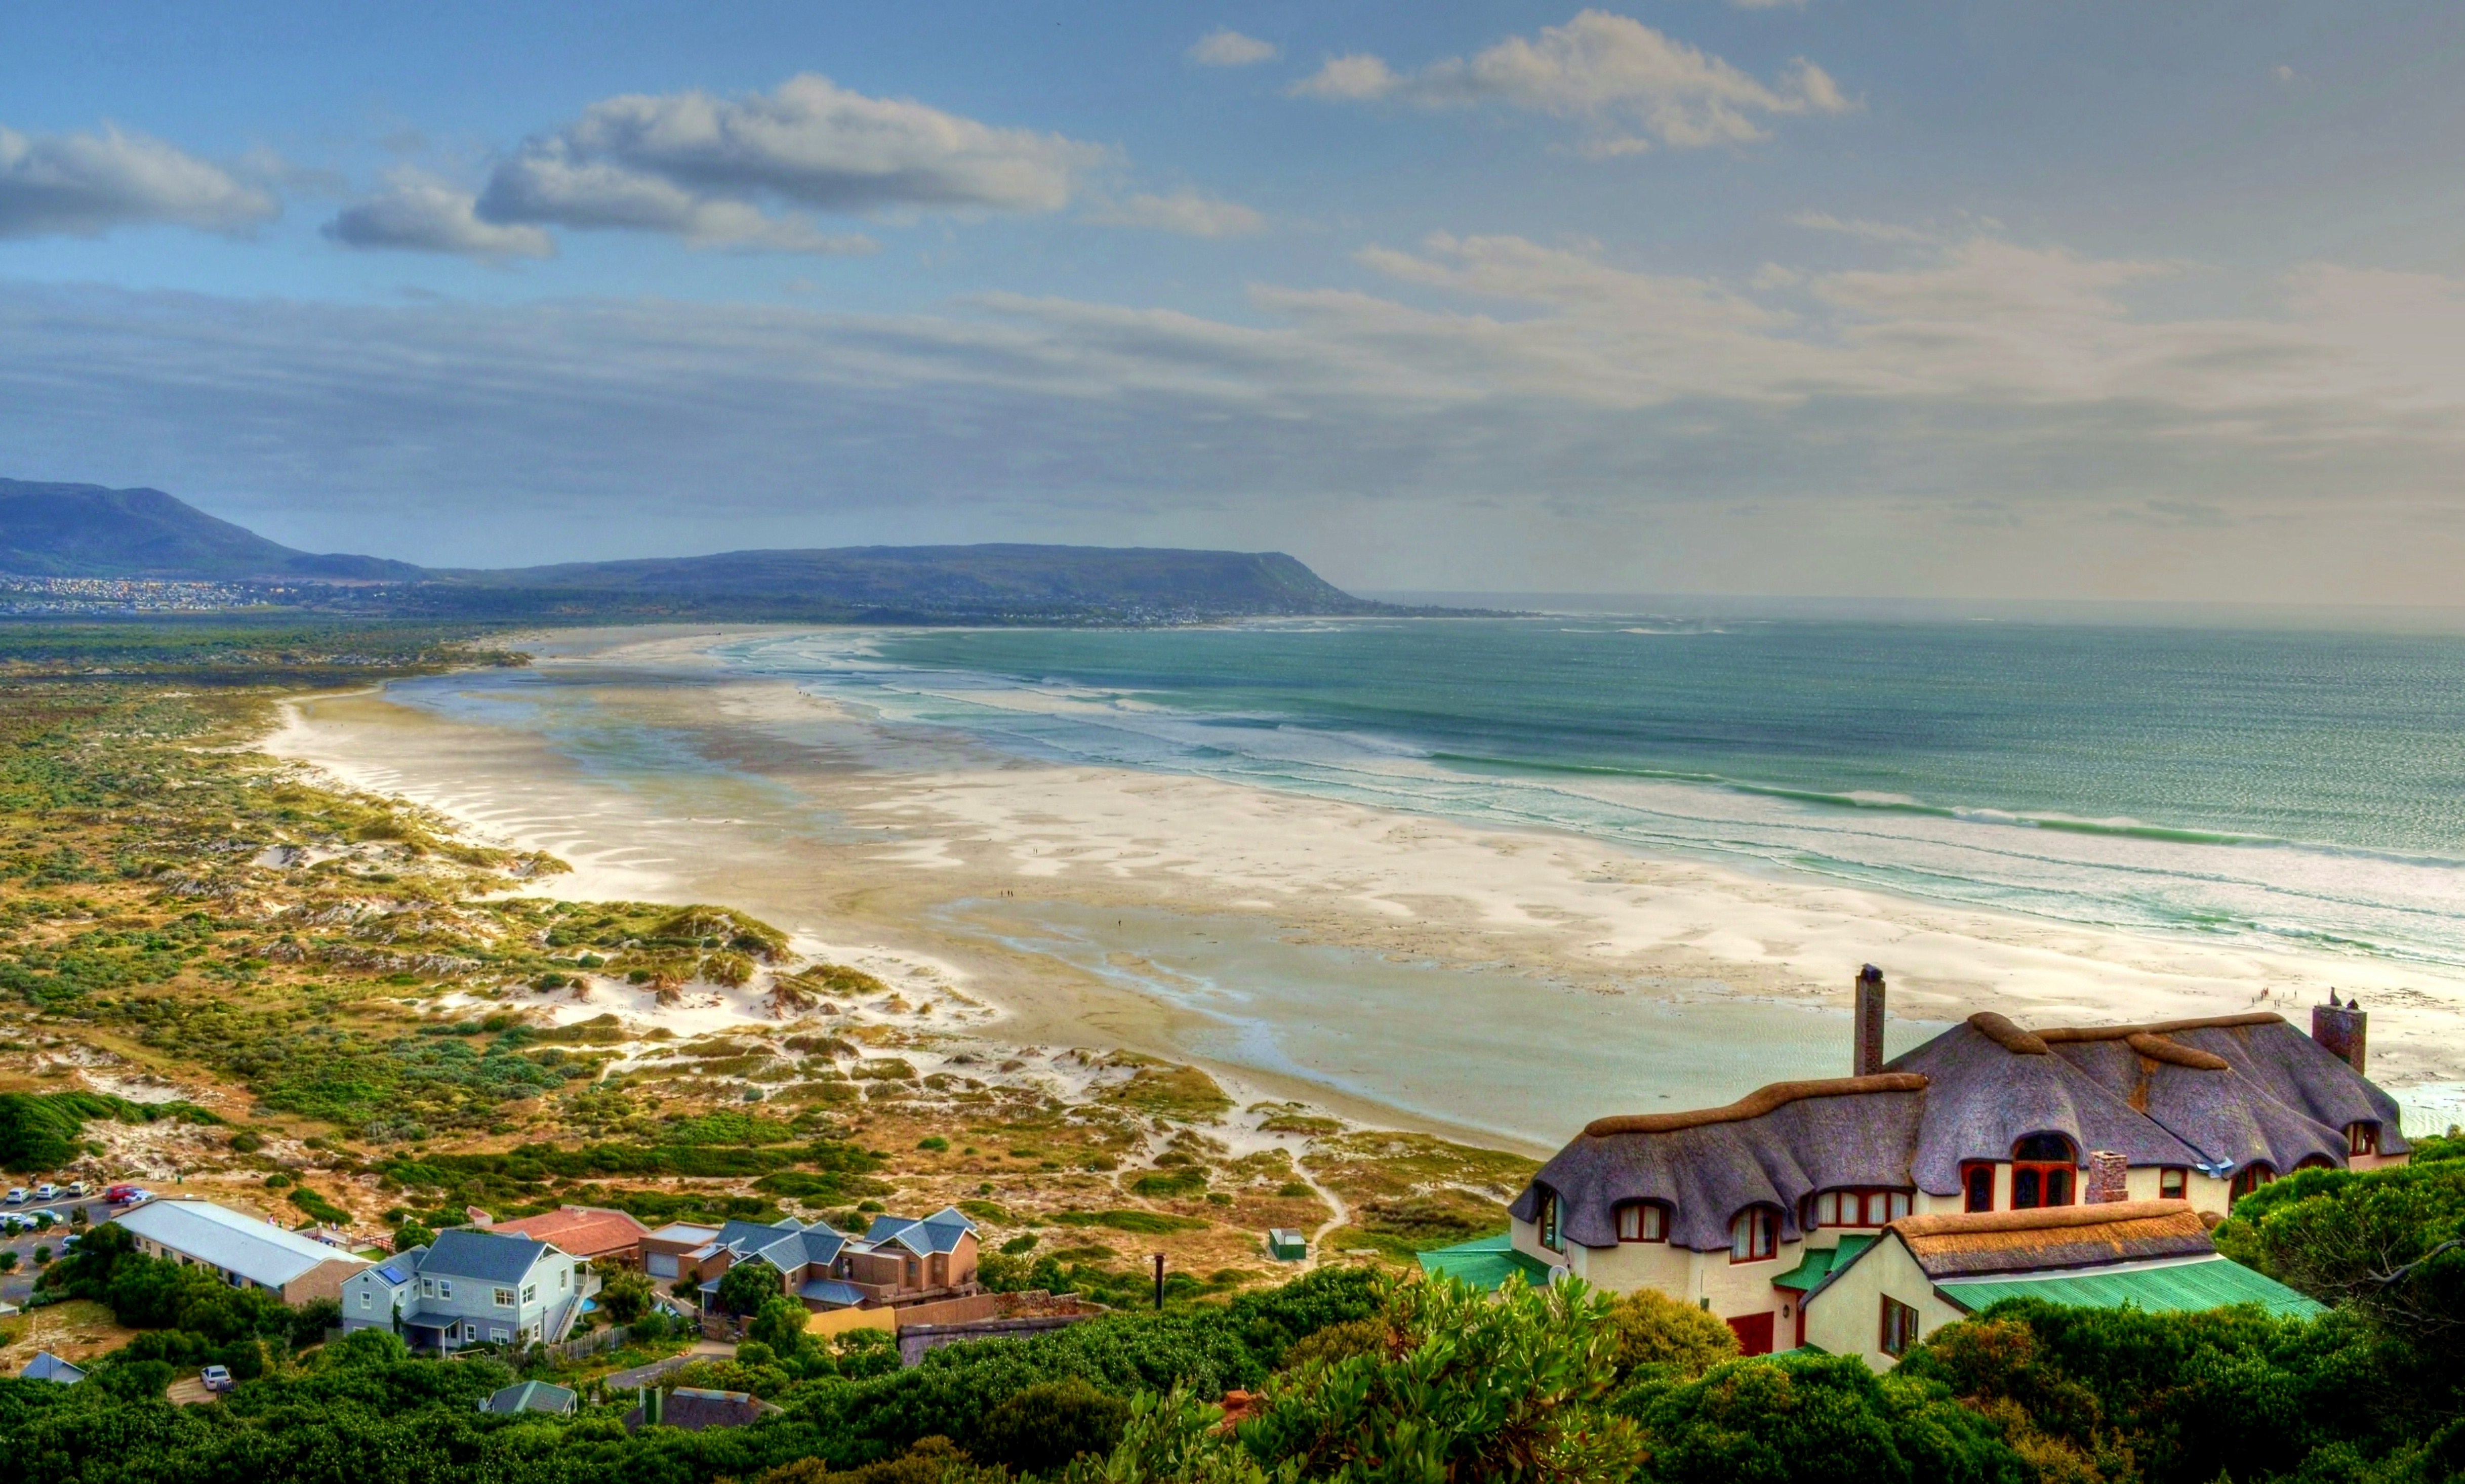 Seaside Mansion Coast South Africa Cape Town Coastline Western Cape Noordhoek Beach Sea Beach House 4869x2932